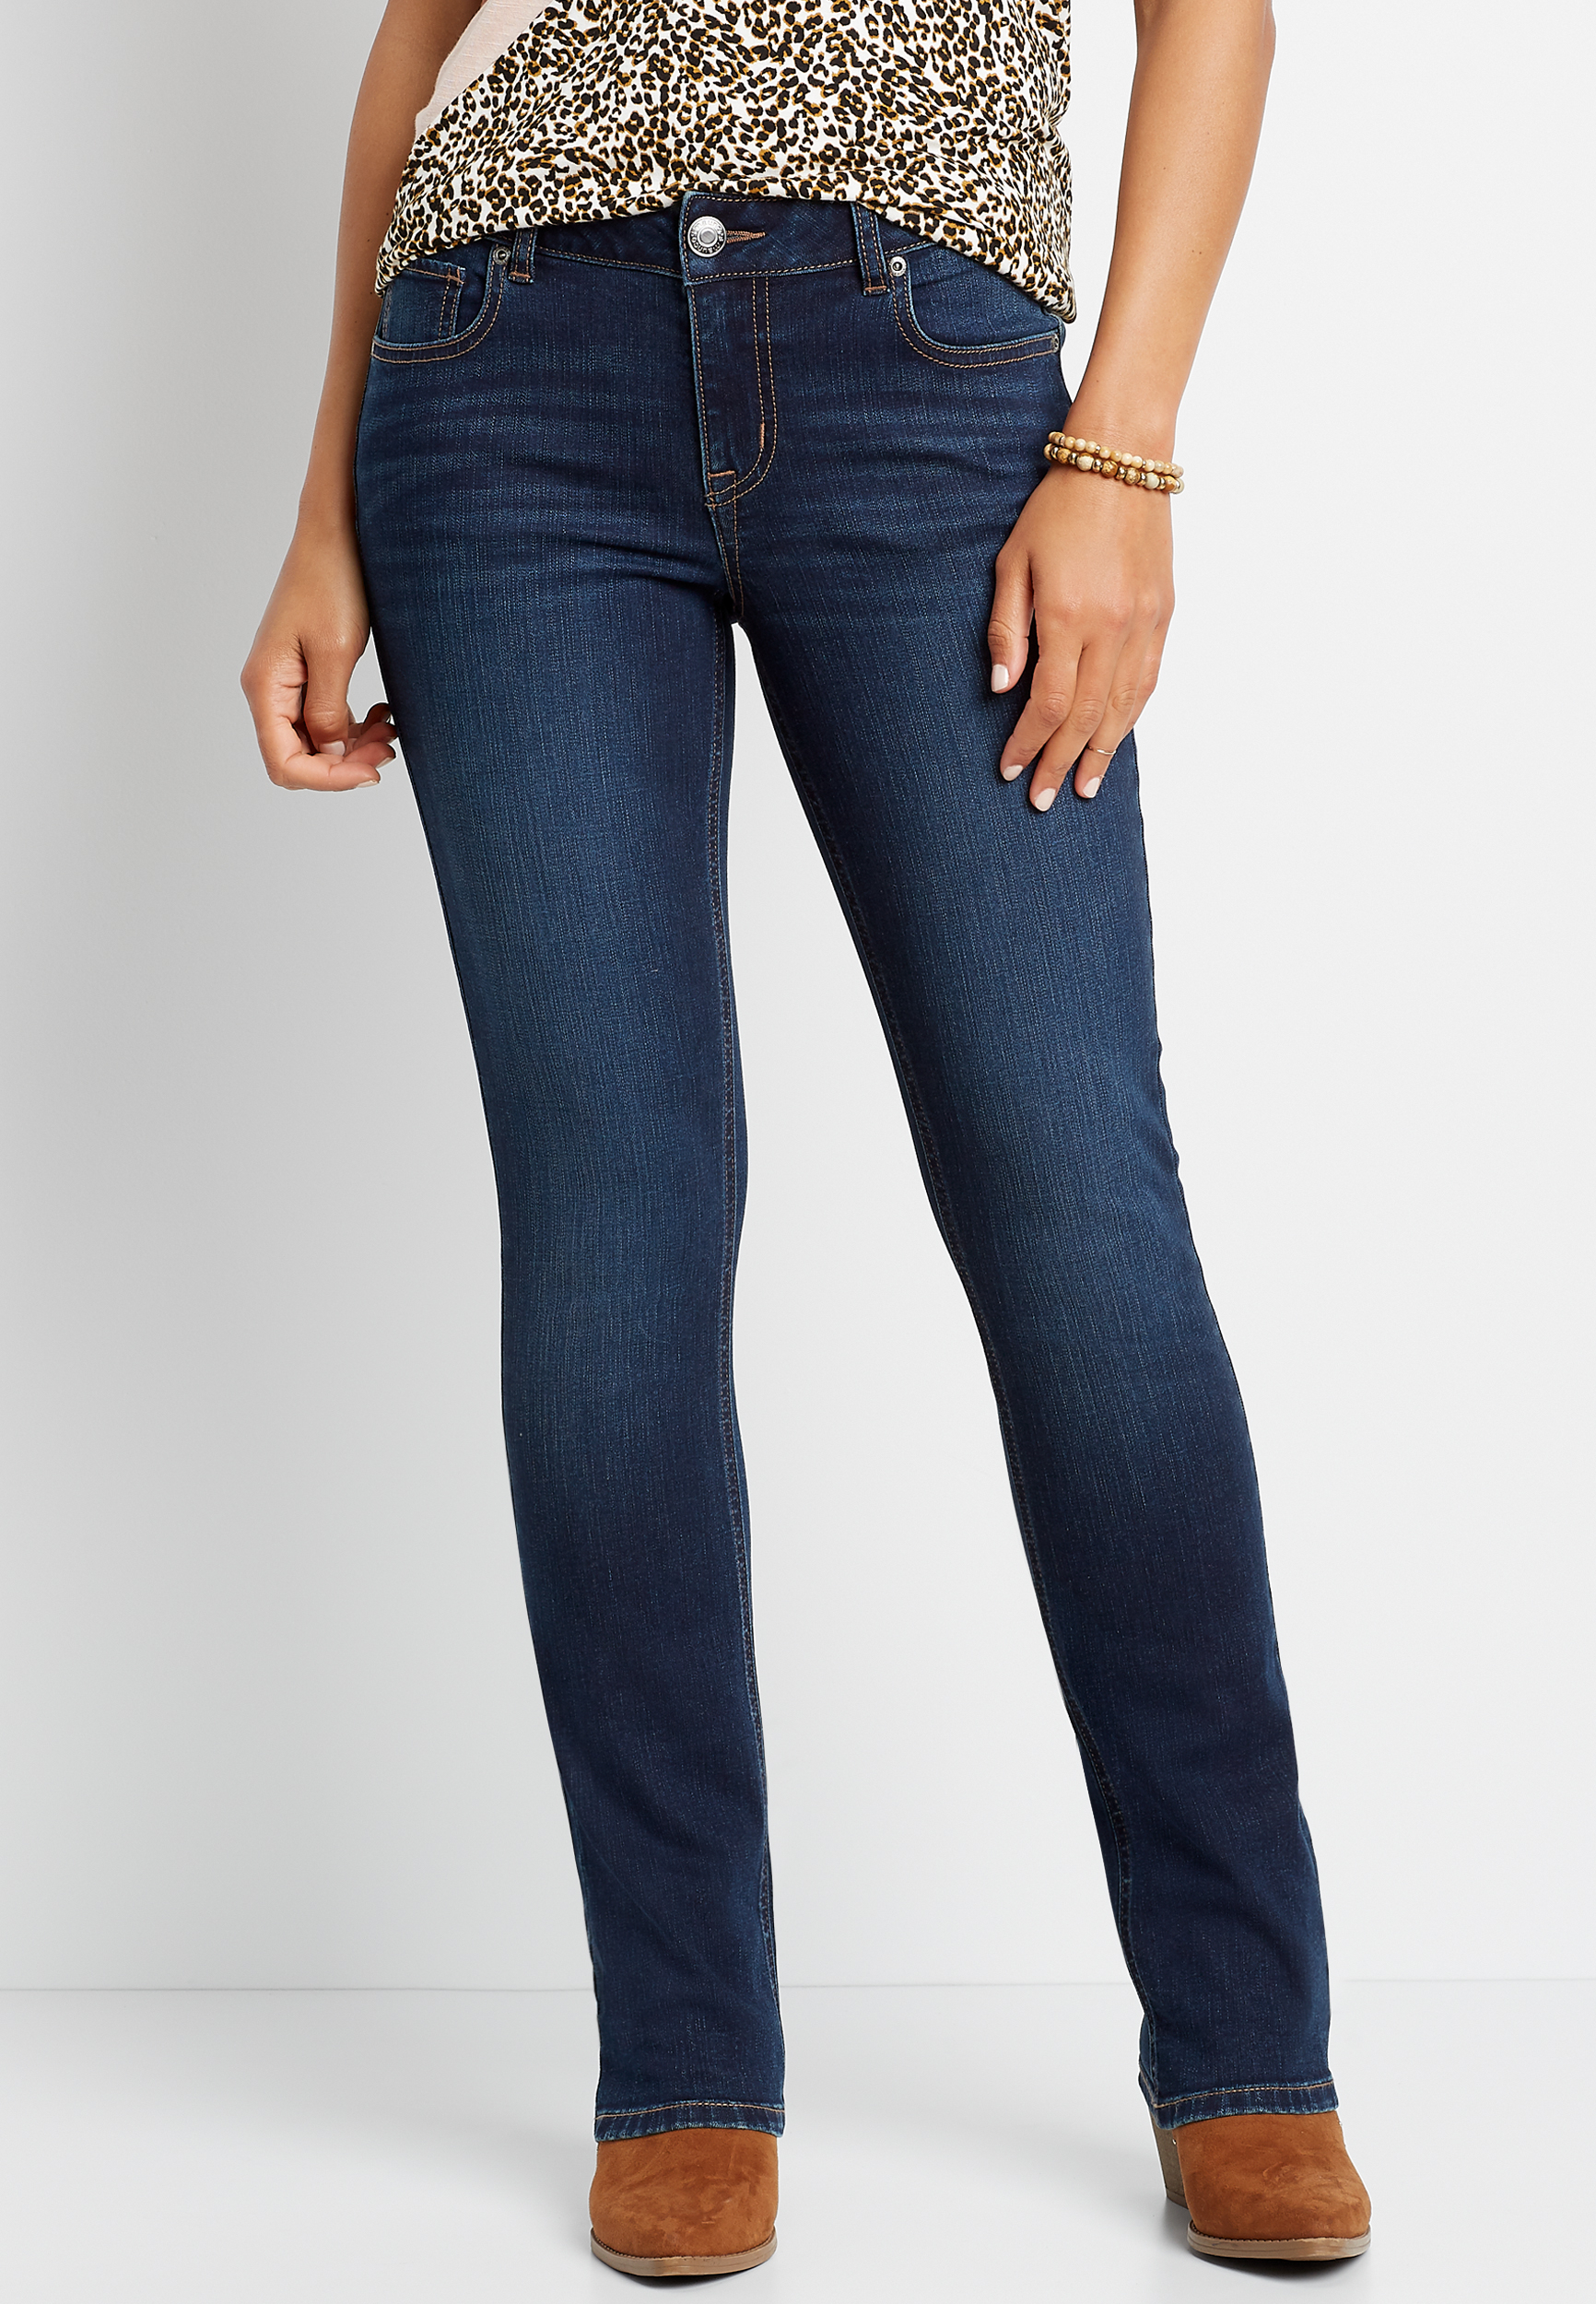 size 1 jeans